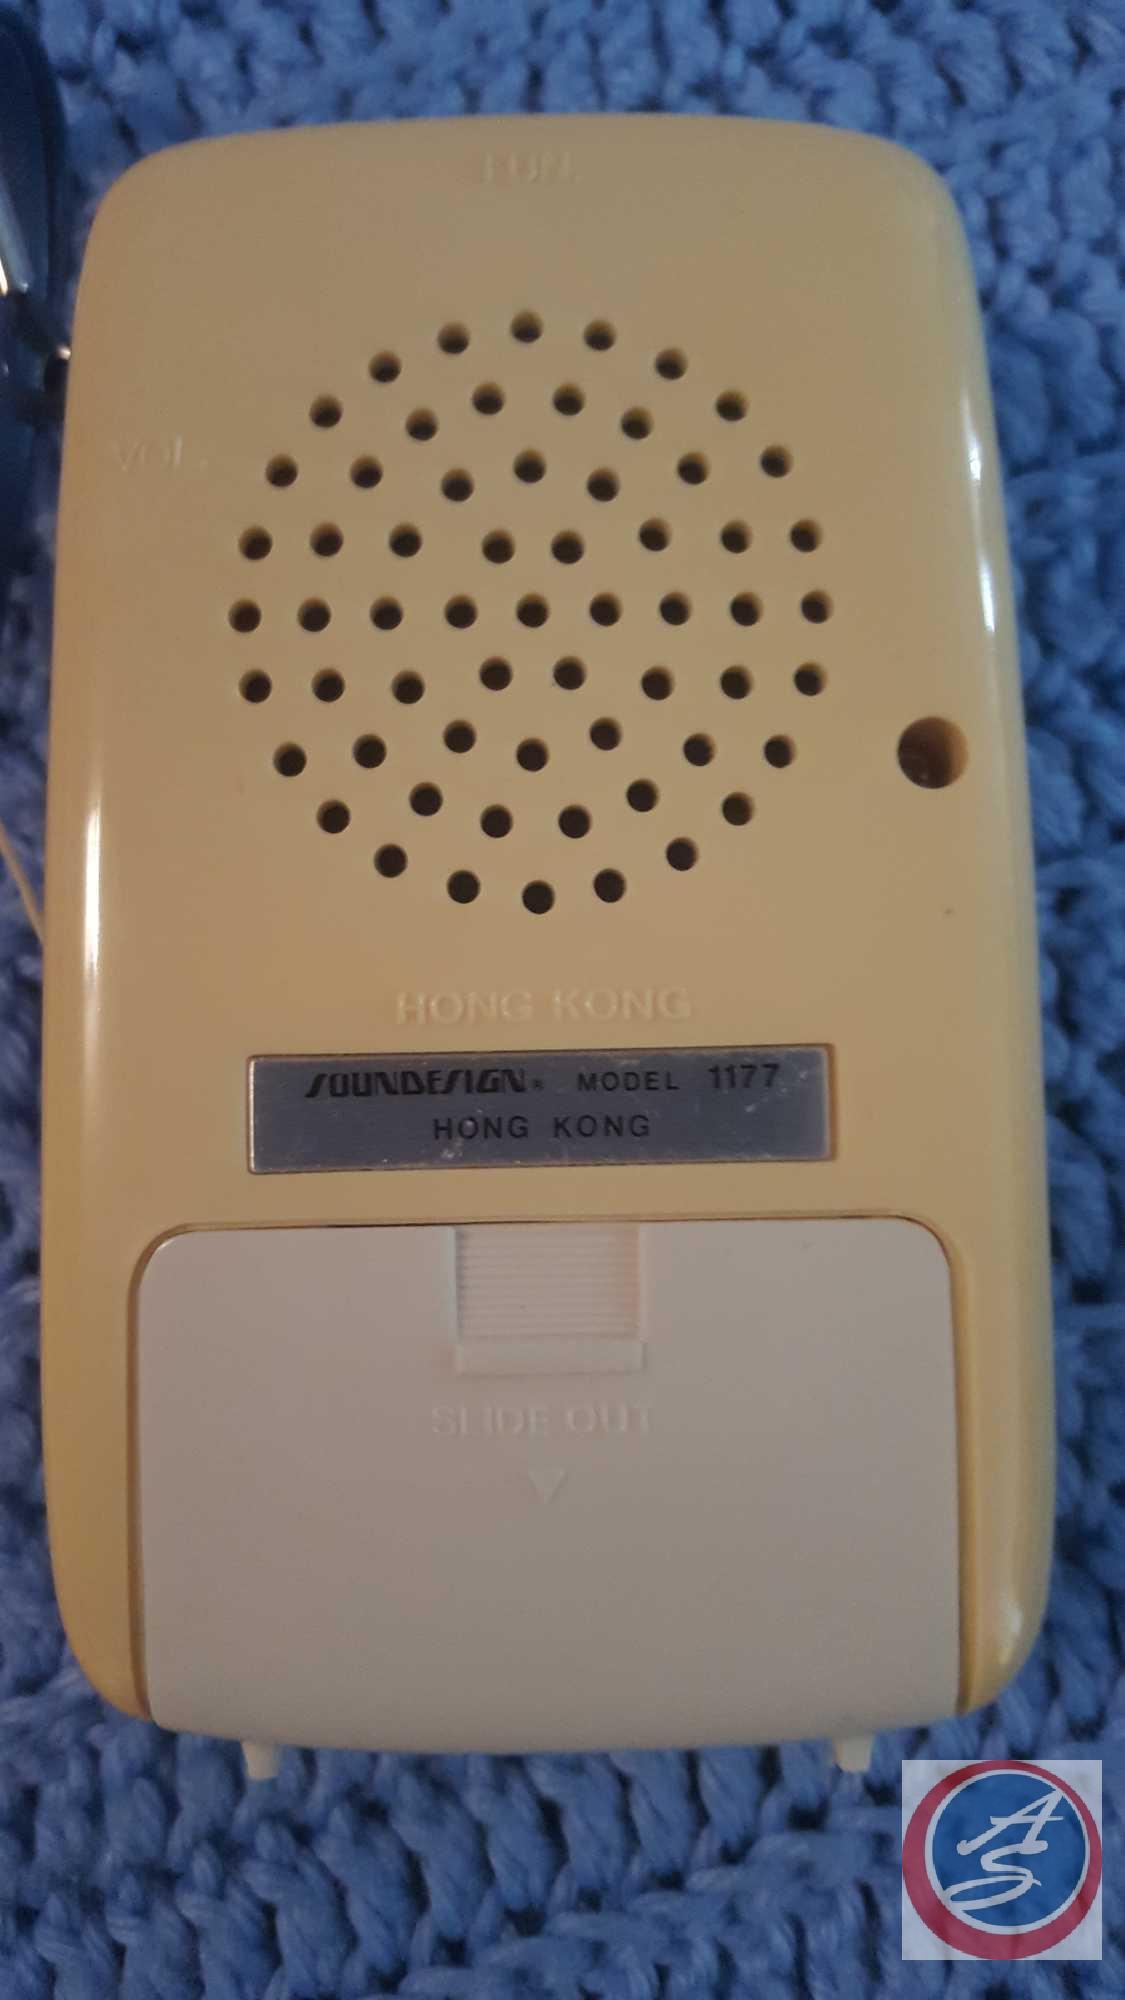 Sound Design Pocket Radio Model No. 1177, Matsusuita Electric Transistor Radio, National Pocket